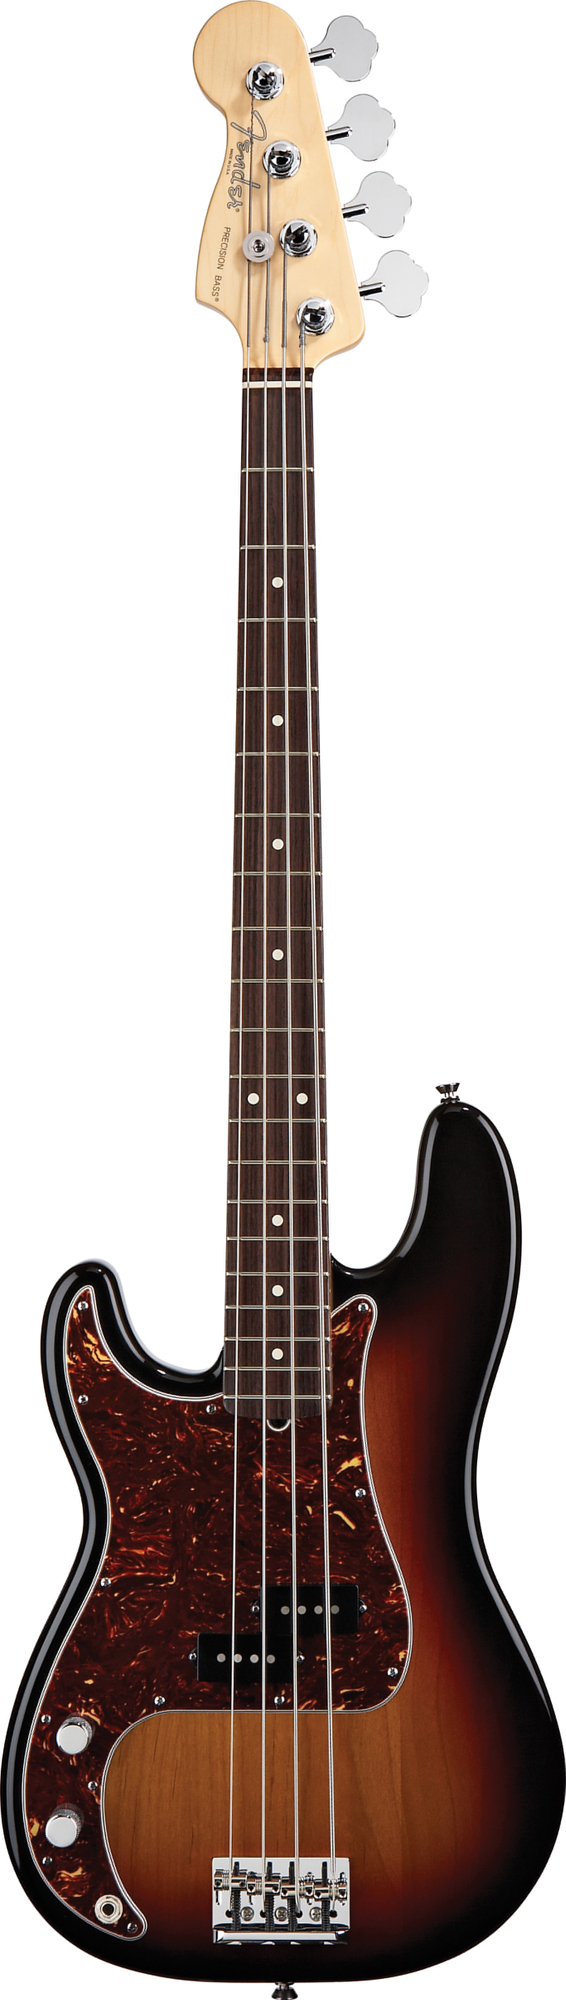 American Standard Precision Bass Left Hand